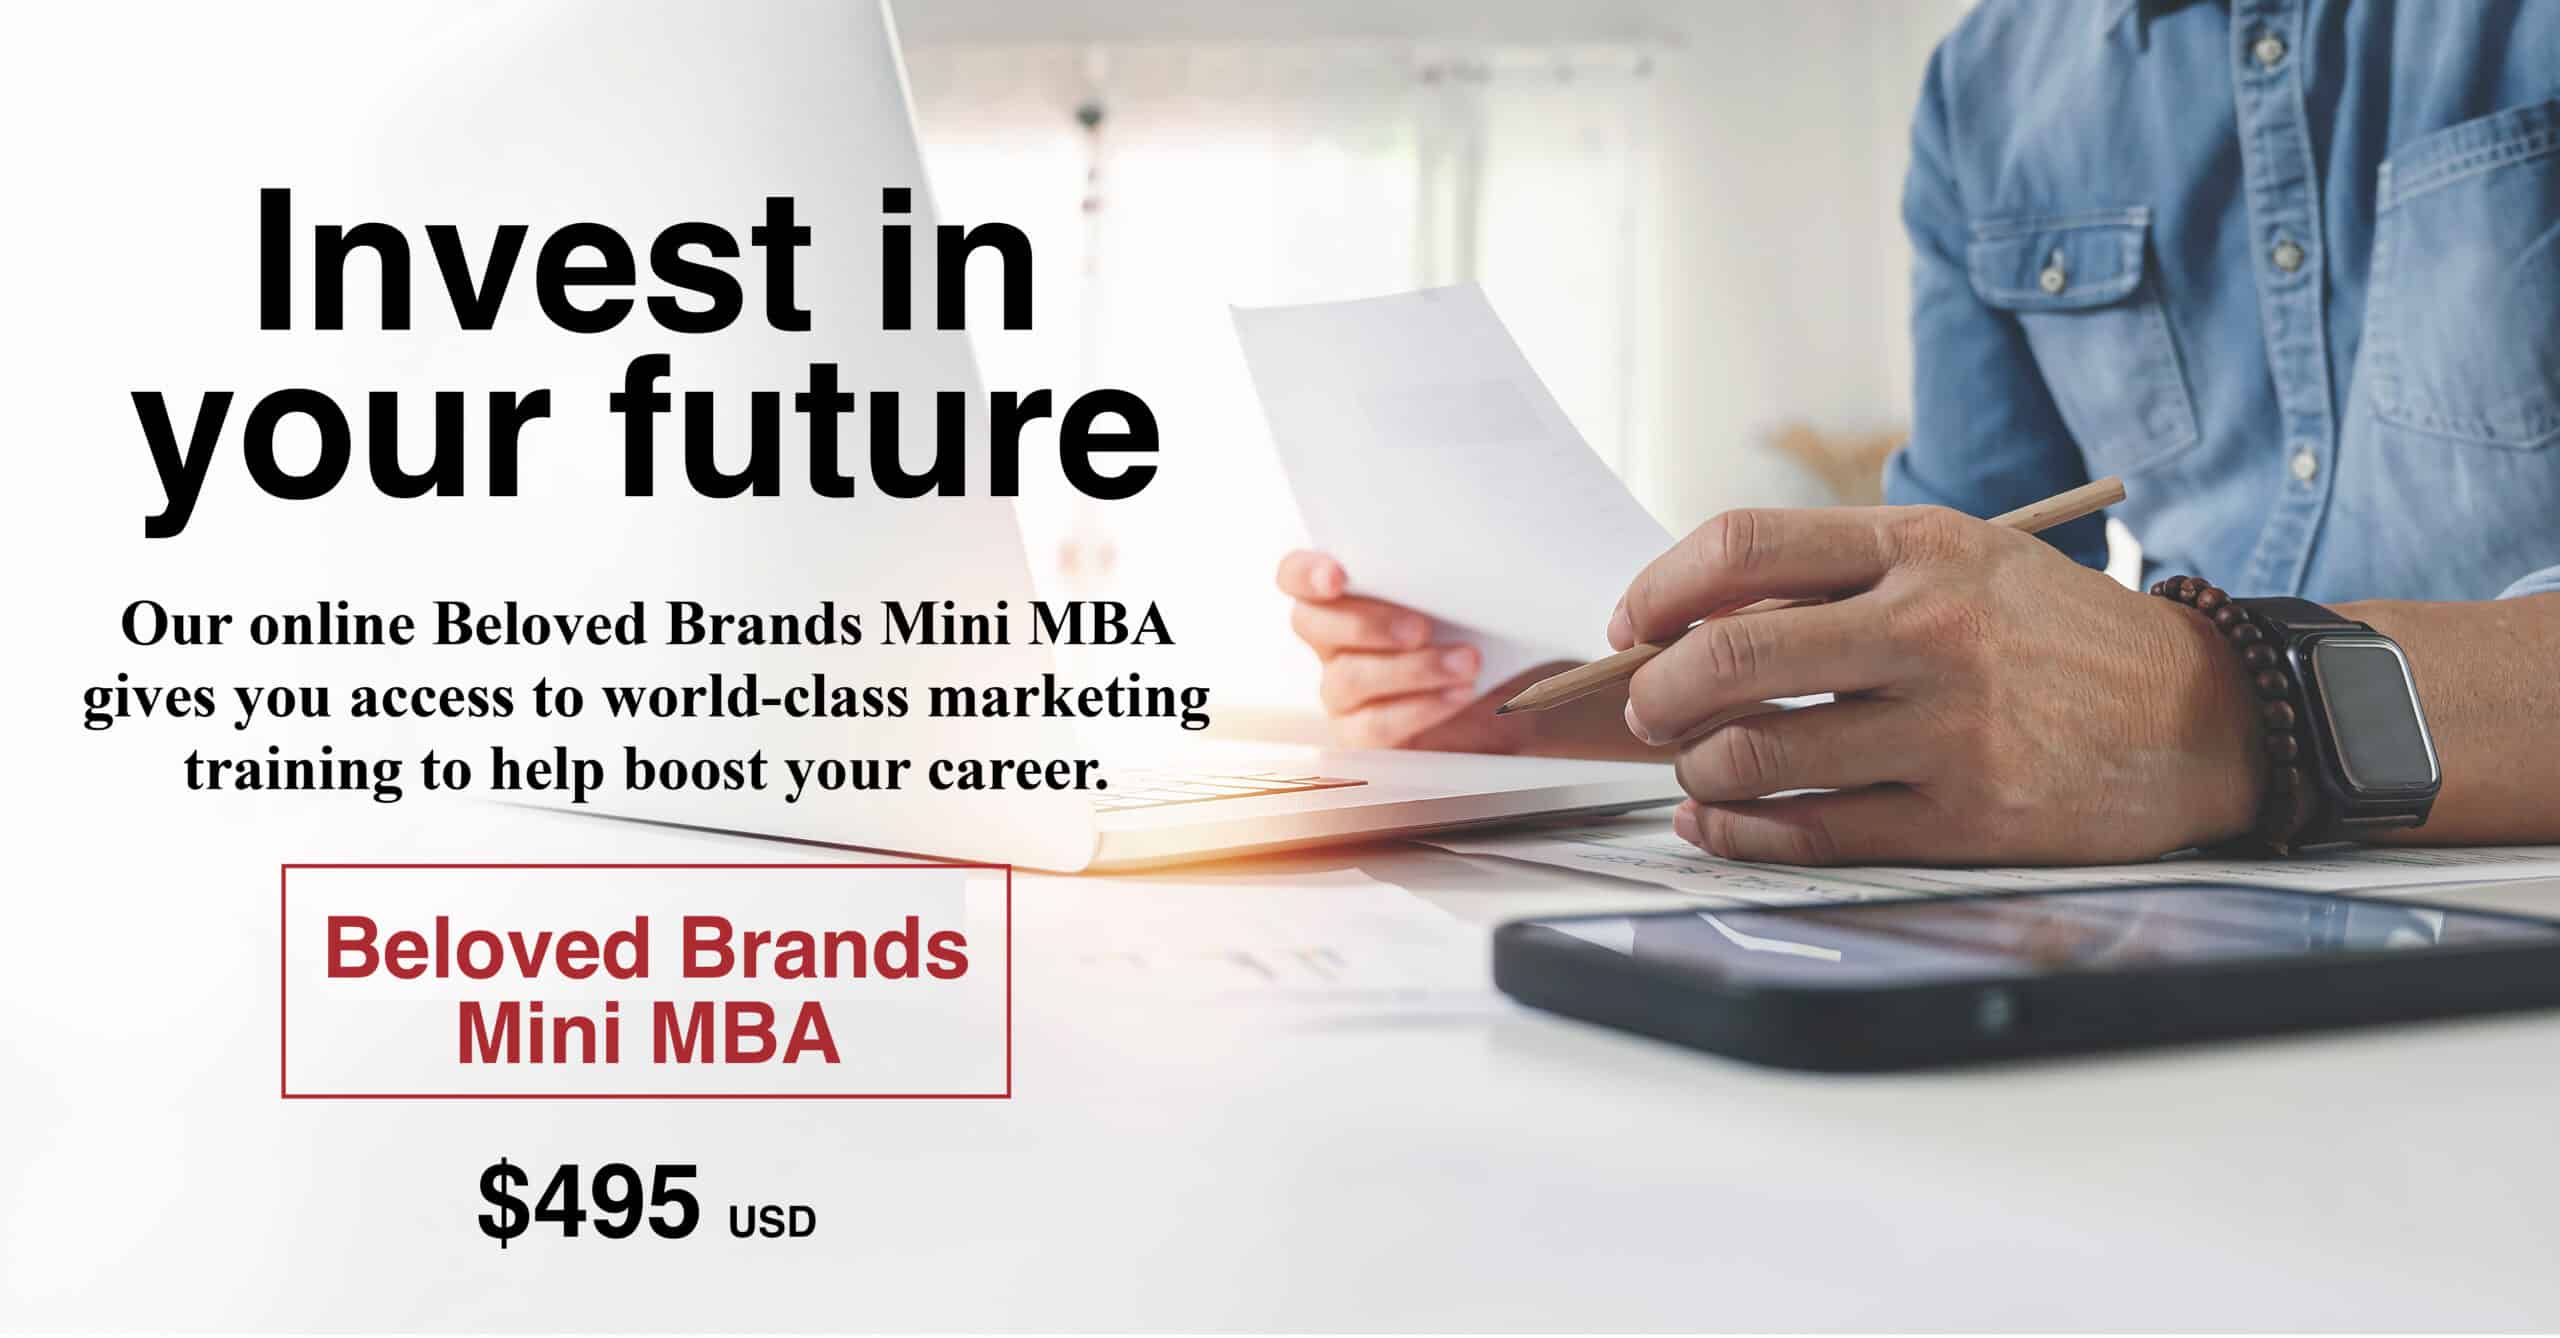 Mini MBA brand management, online marketing course, marketing certificate